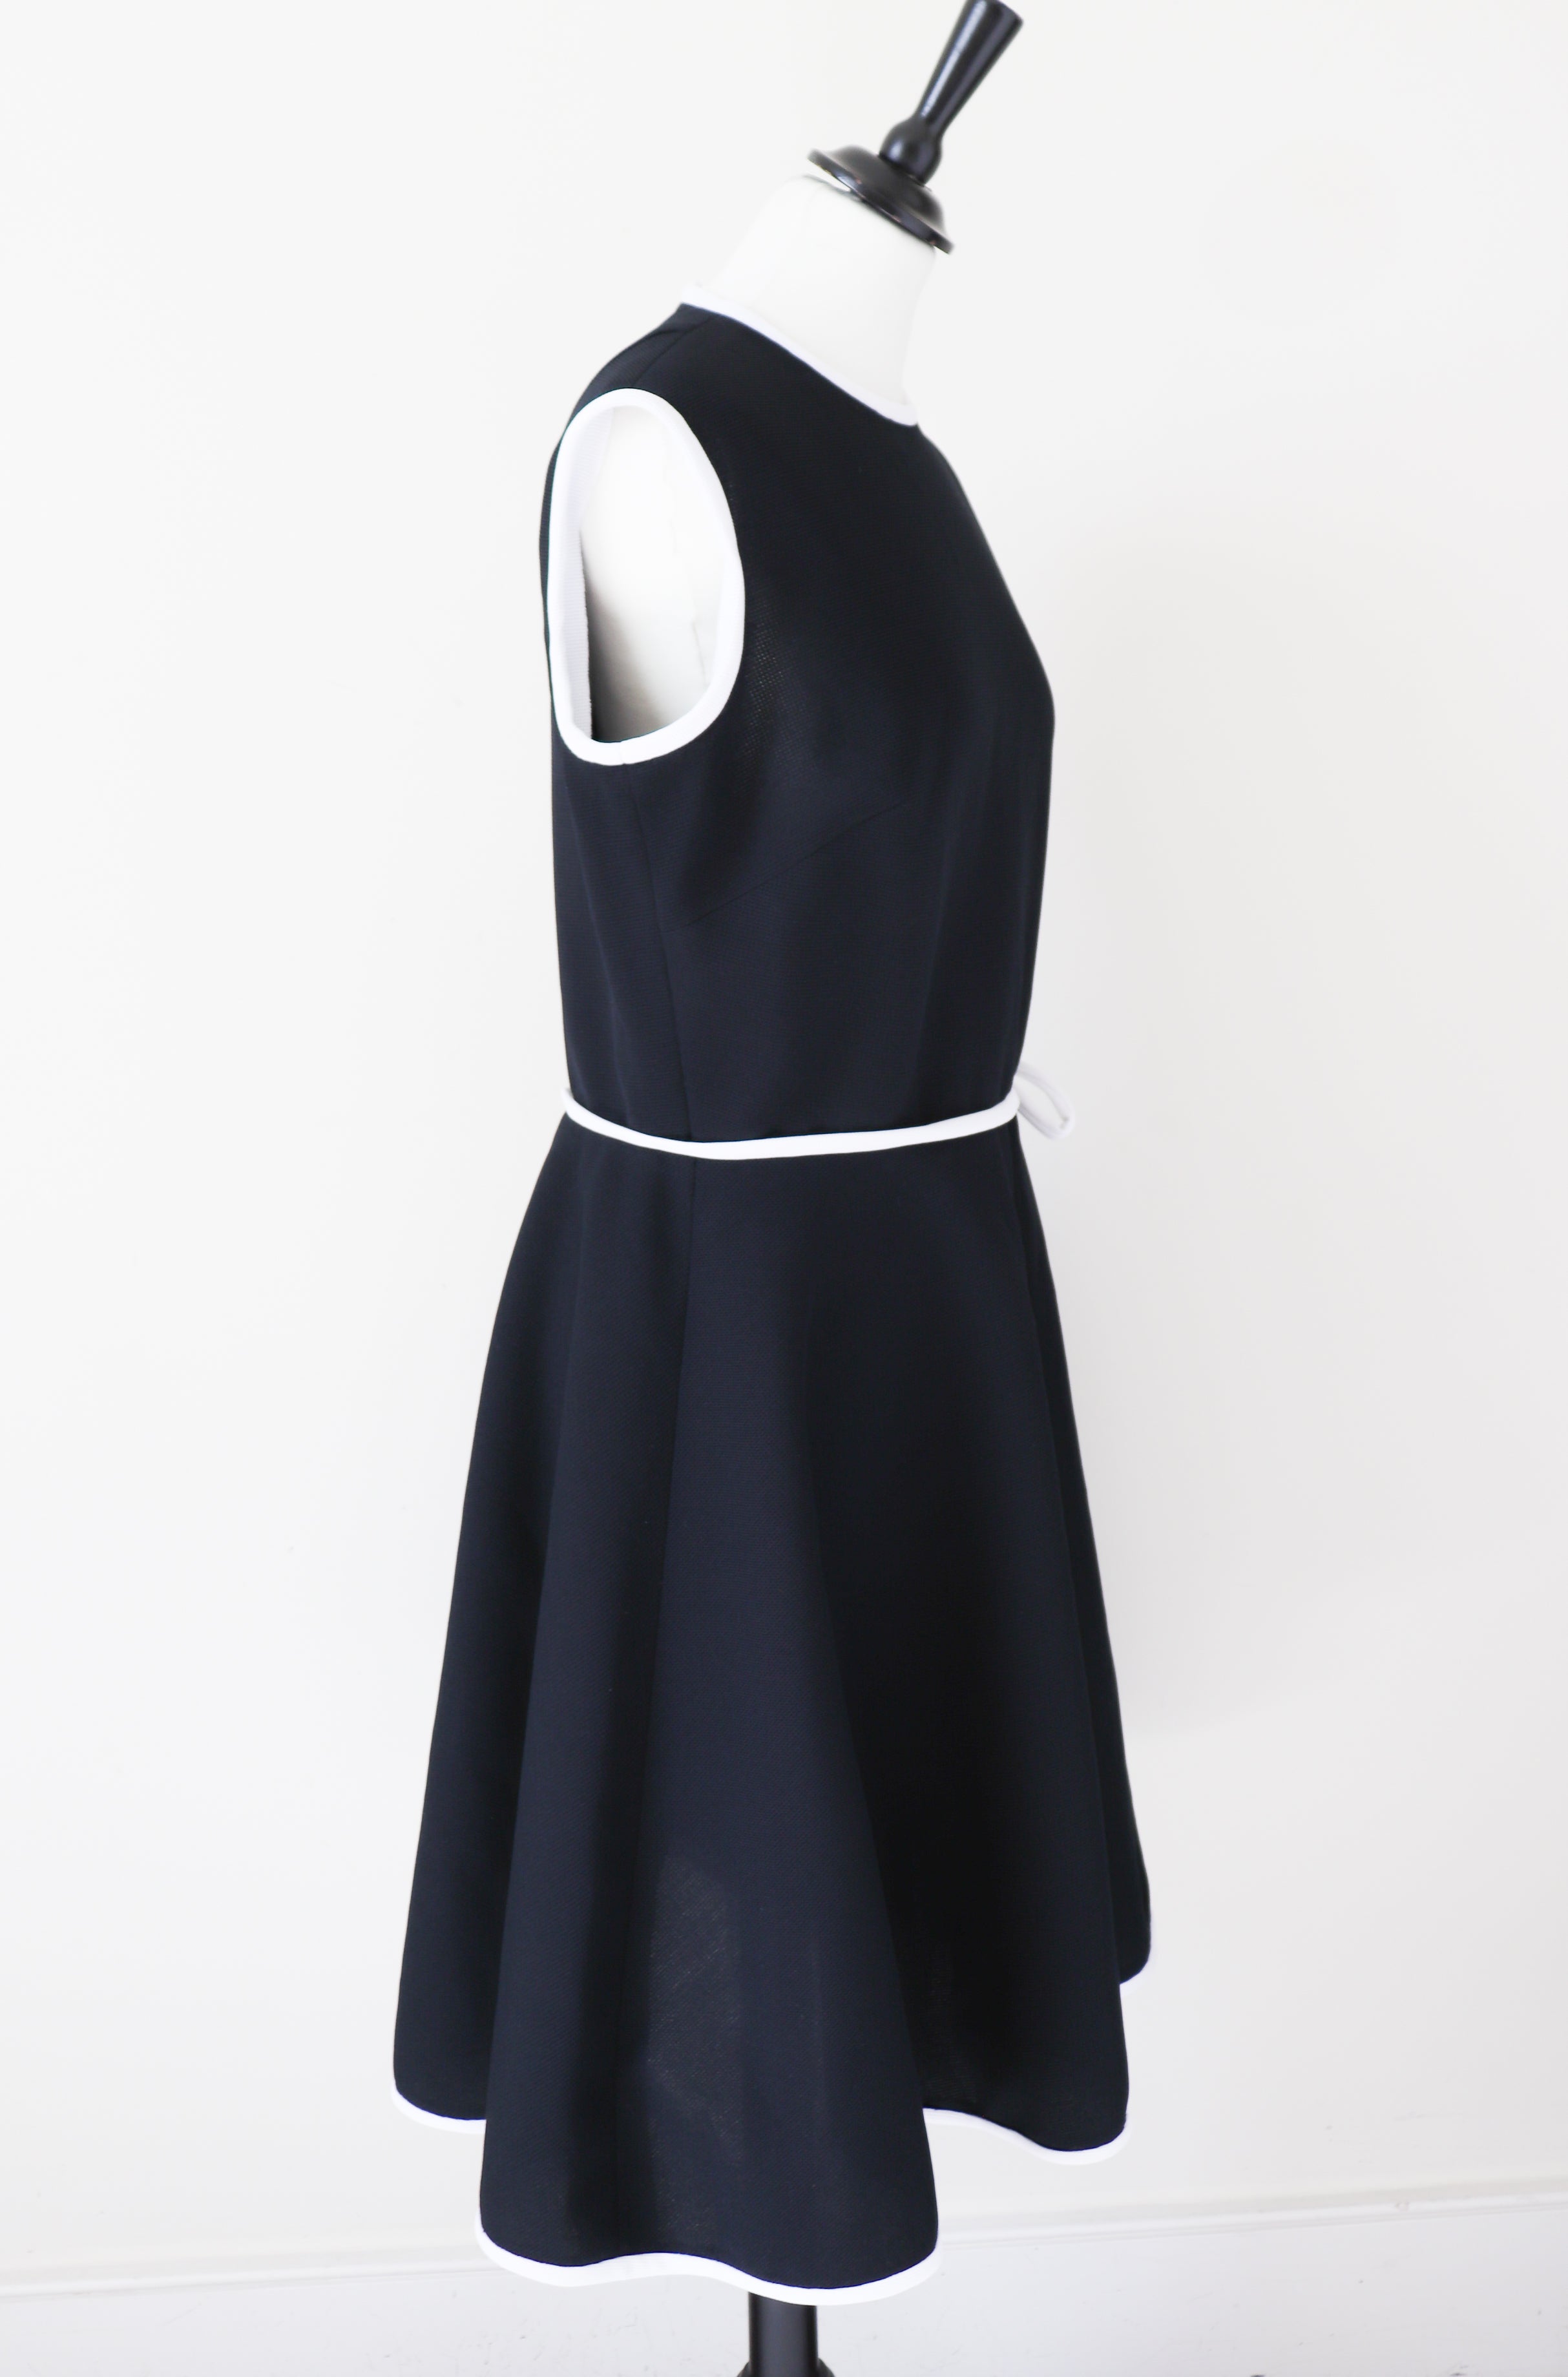 1960s Vintage Mod Dress - Tom Jones of Mayfair - Black / White - Fit L / UK 14